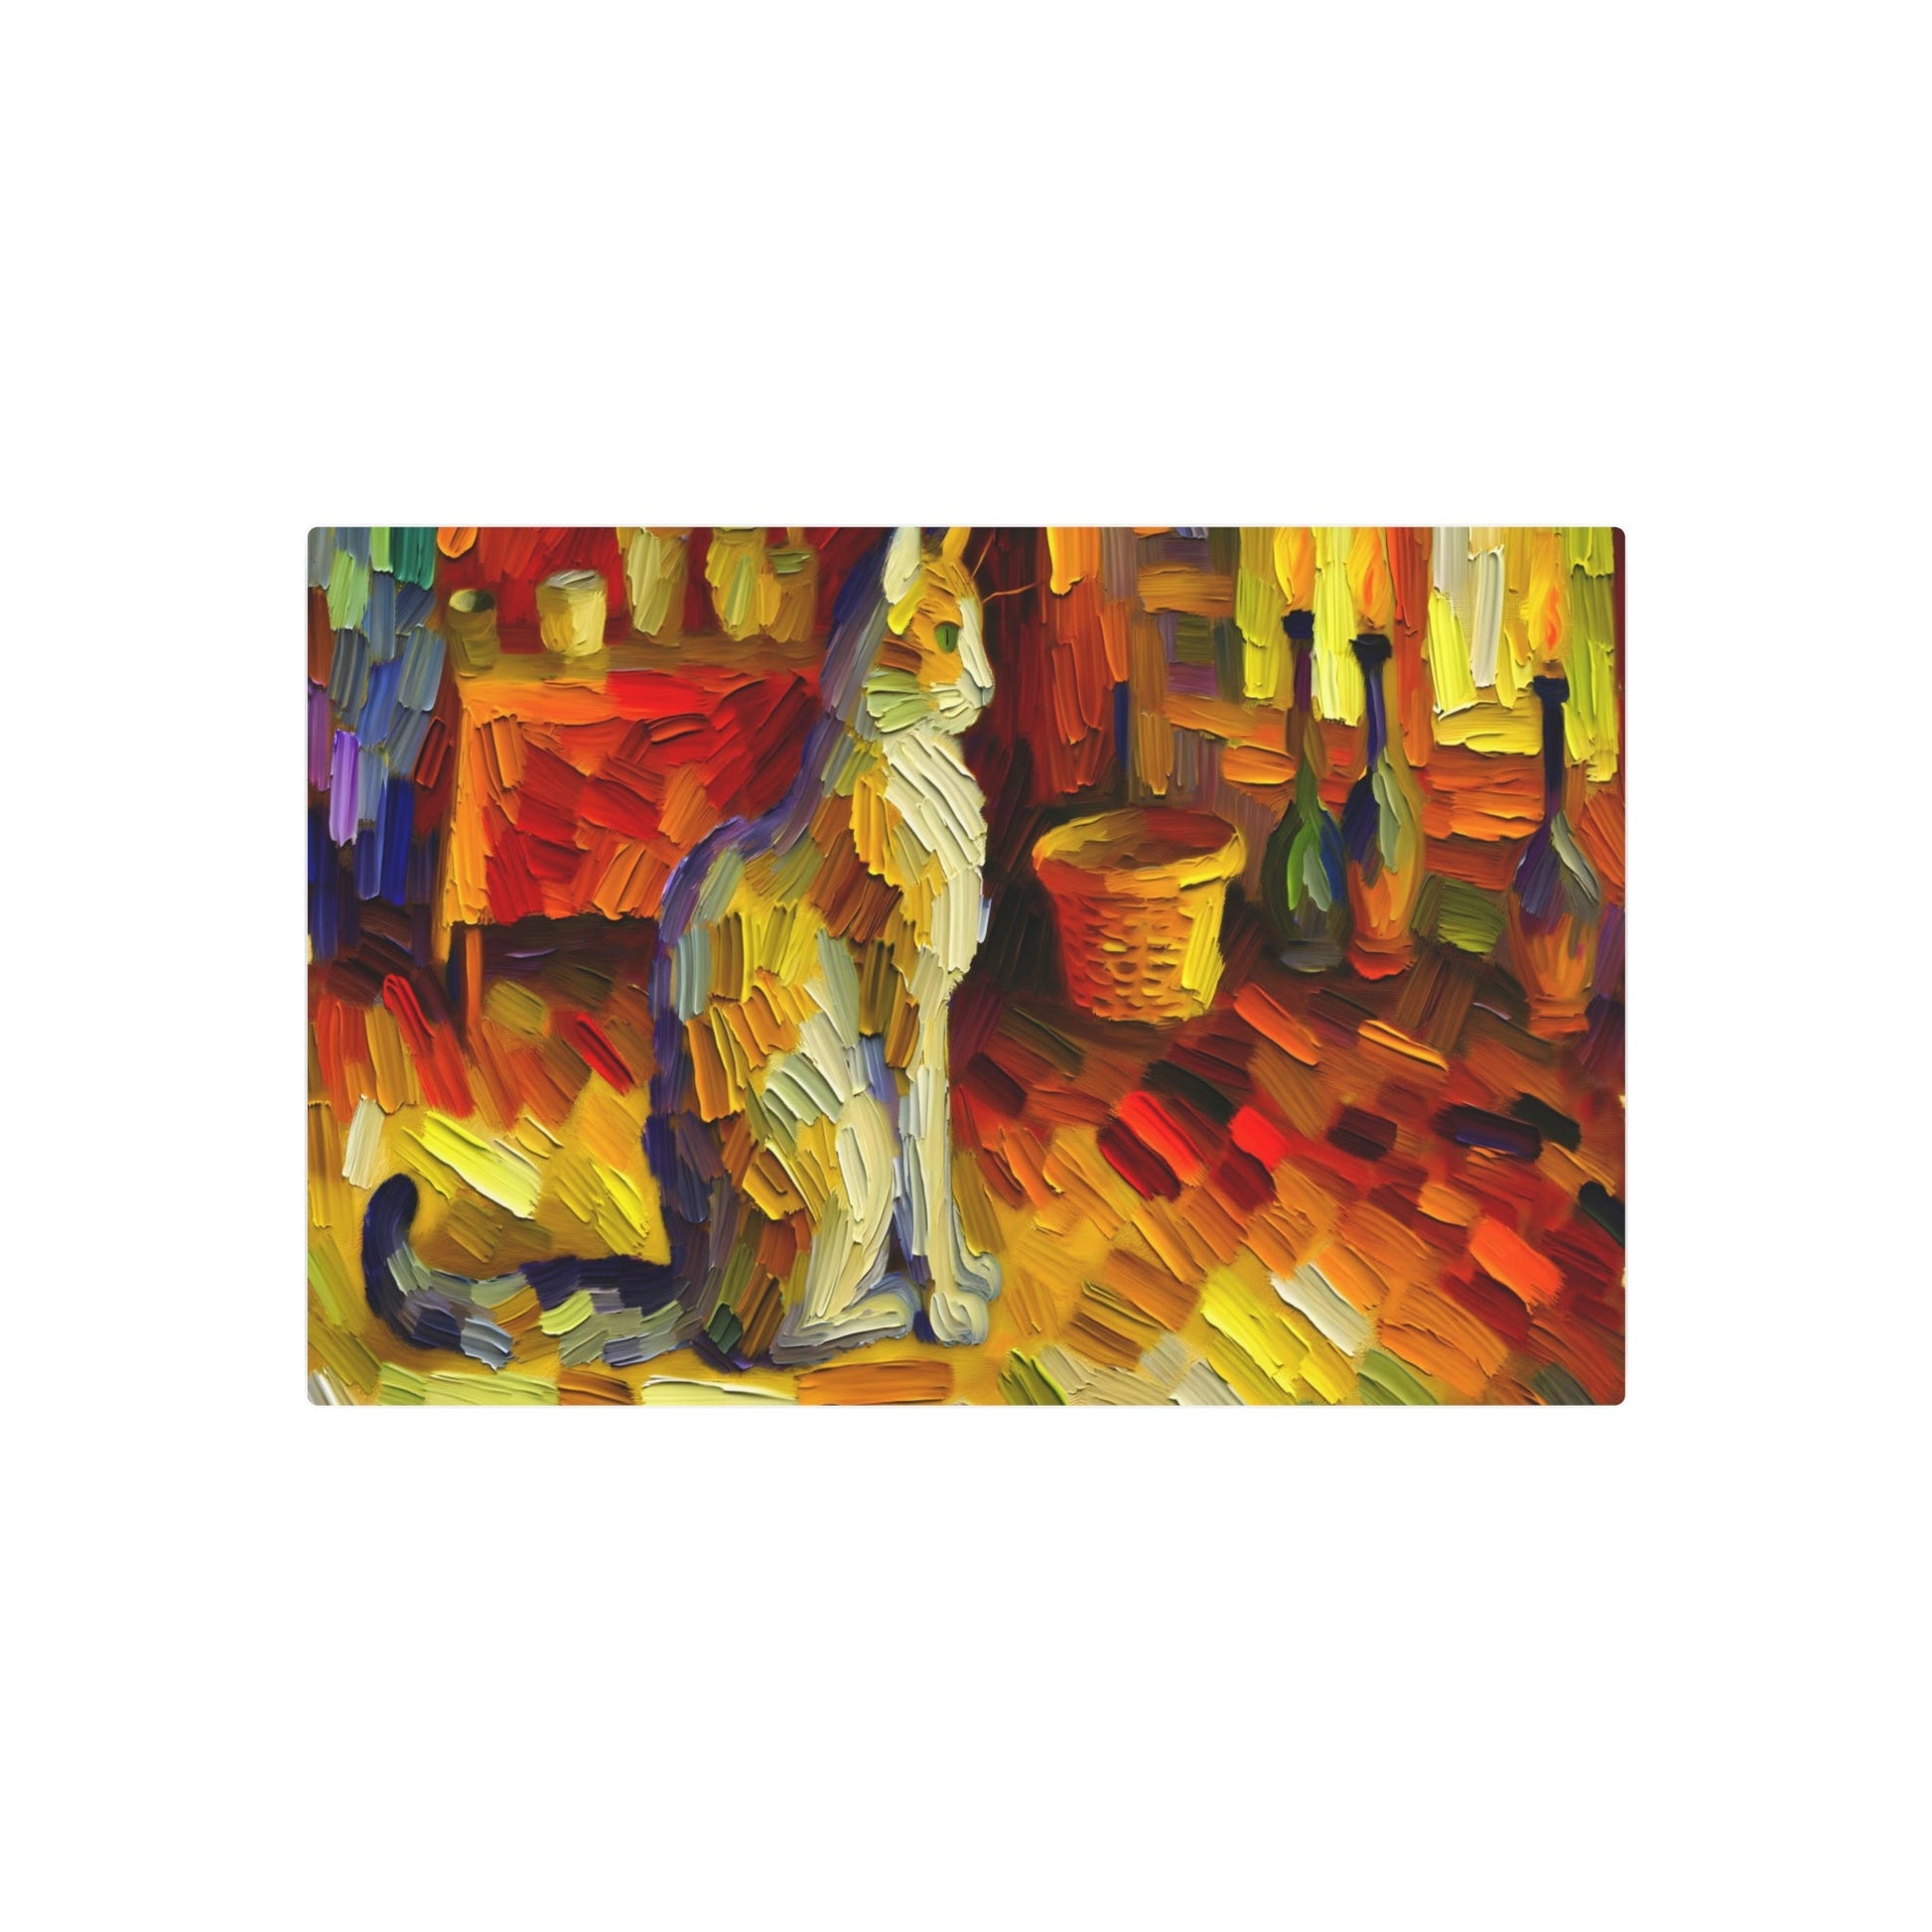 Metal Poster Art | "Post-Impressionism Western Art Style: Vibrant, Warm Colored Painting of Elegant Cat in Room - Classic Post-Impressionist Art - Metal Poster Art 30″ x 20″ (Horizontal) 0.12''